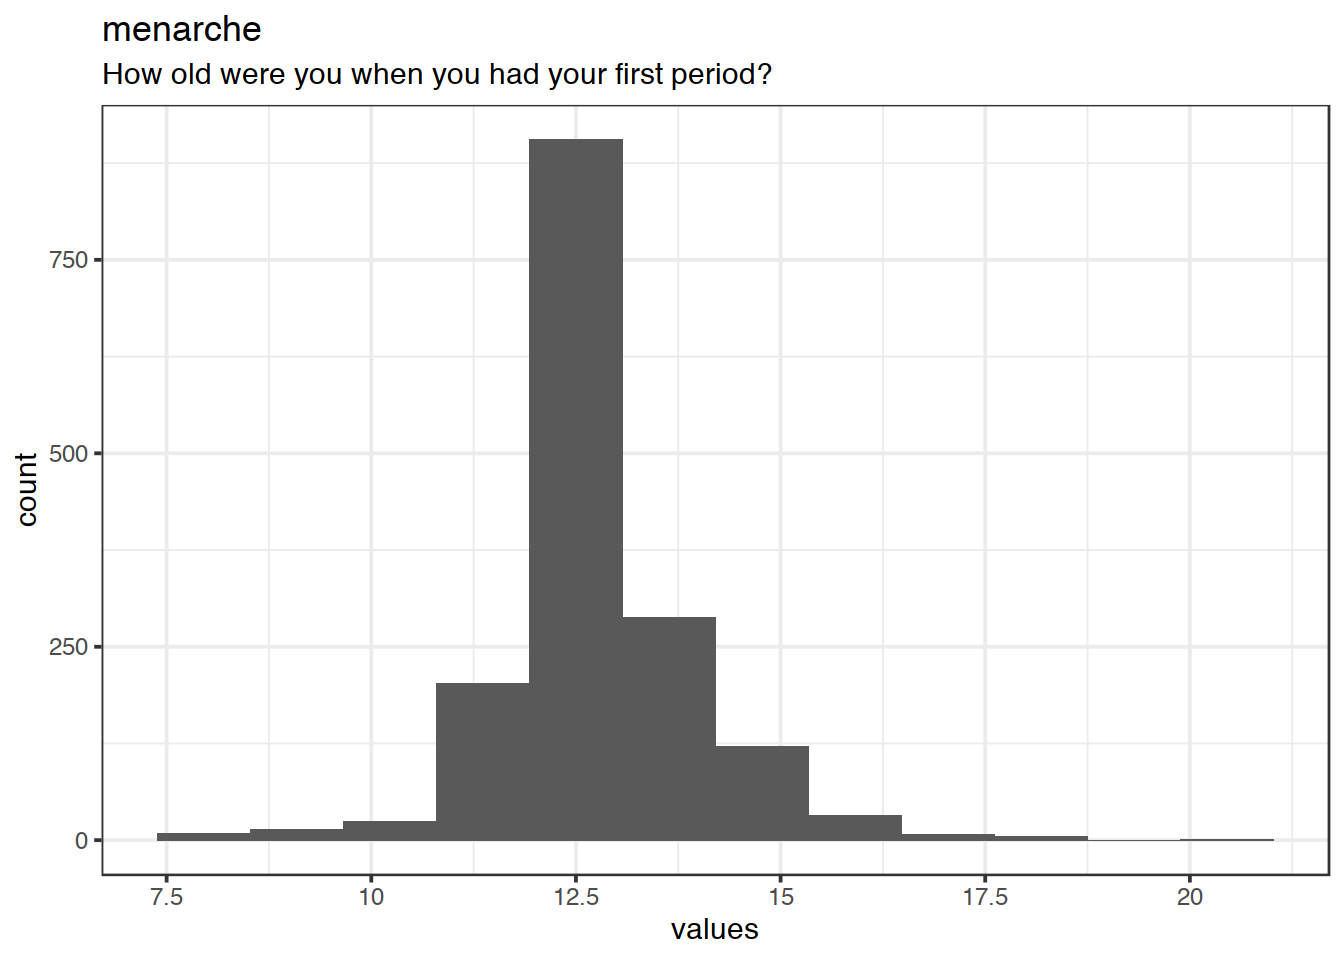 Distribution of values for menarche